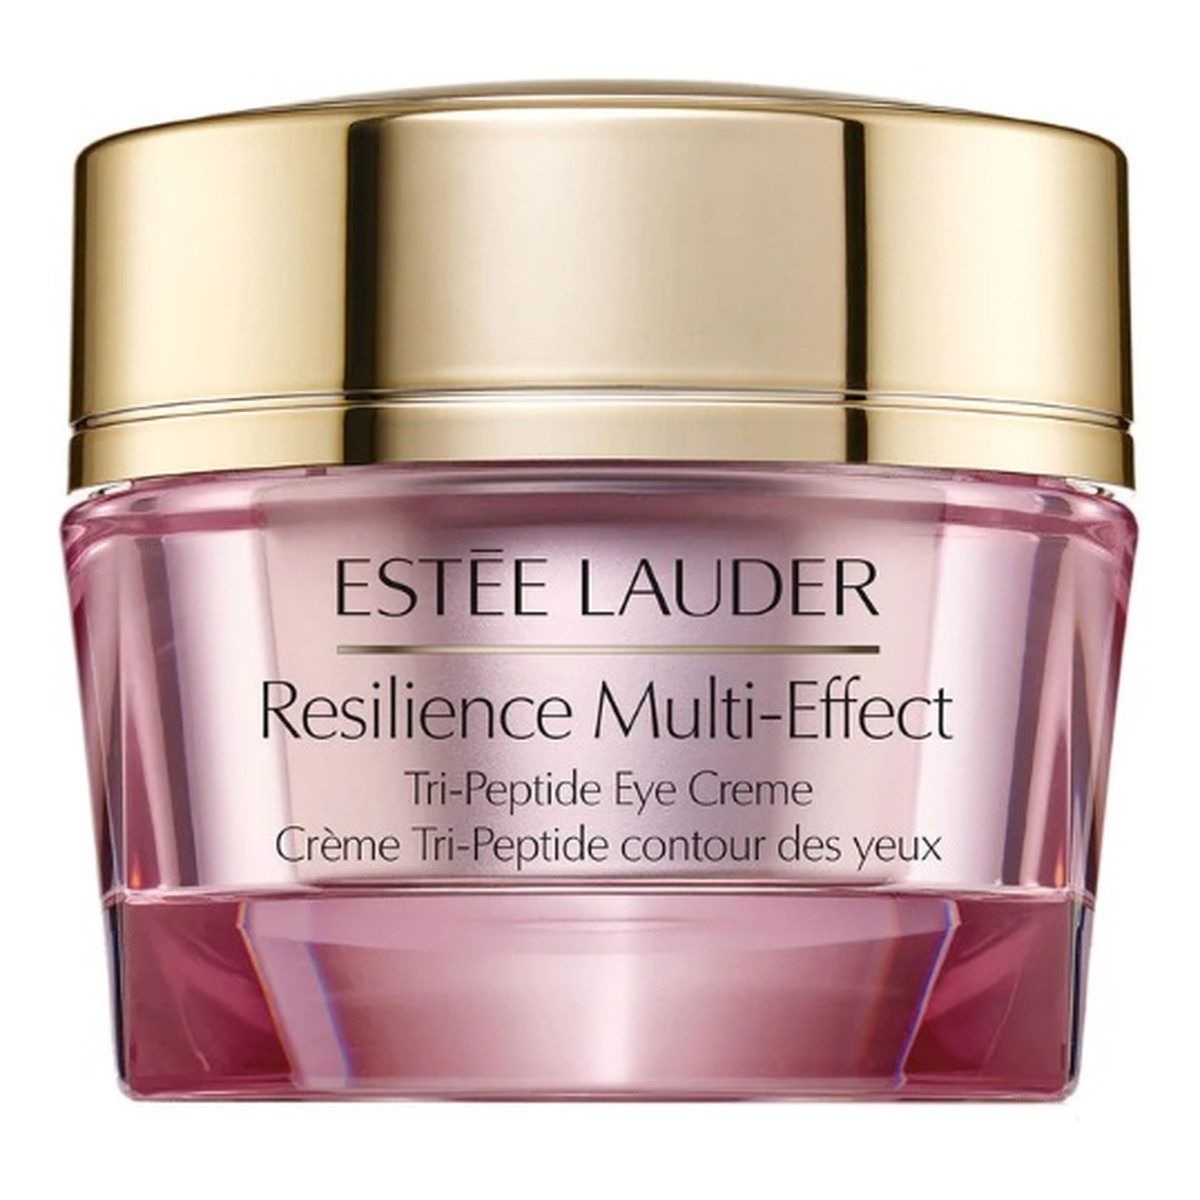 Estee Lauder Resilience Multi-Effect Tri-Peptide Eye Creme Krem pod oczy 15ml